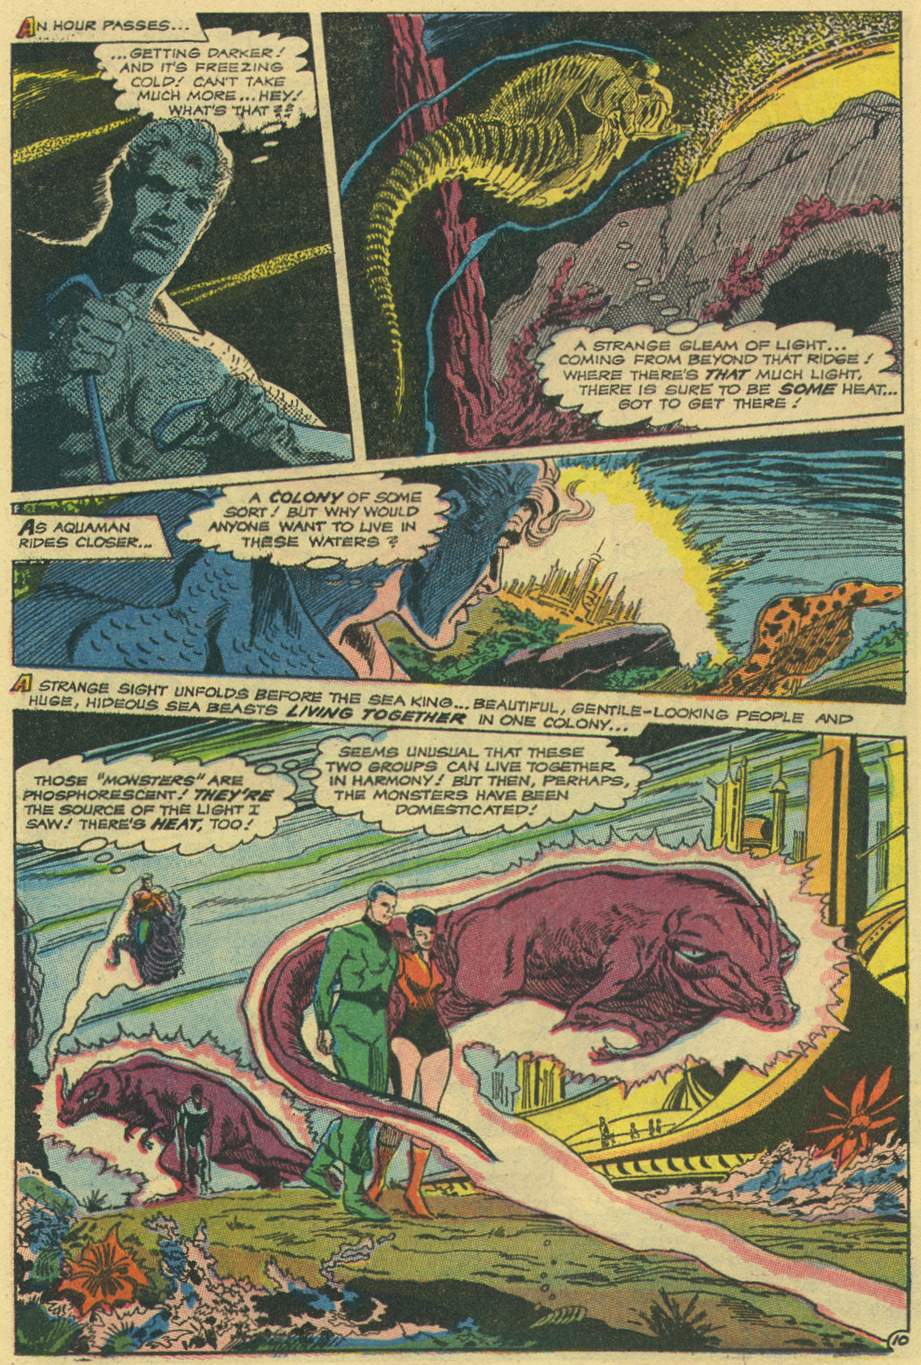 Aquamam #41 by Steve Skeates, Jim Aparo, and Dick Giordano